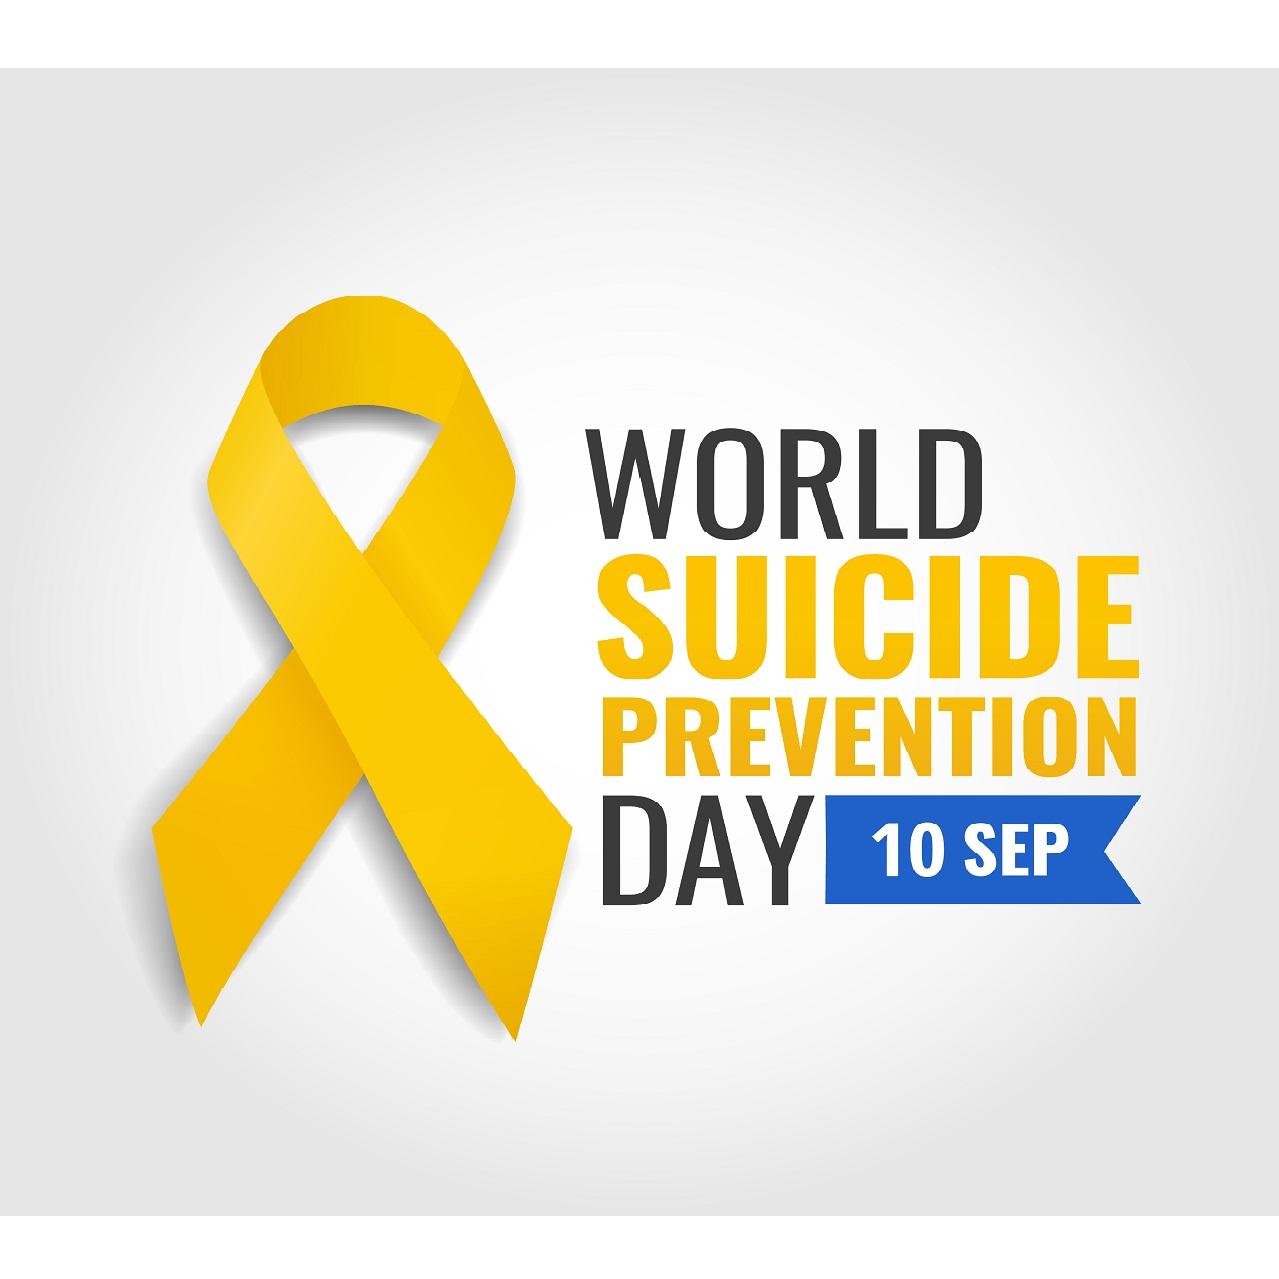 क्यों मनाया जाता है विश्व आत्महत्या रोकथाम दिवस ?, Vishv Aatmhatya Roktham Diwas Kyu Manaya Jata Hai, Why is 10th Sep World Suicide Prevention Day Celebrated? What is the significance of this?